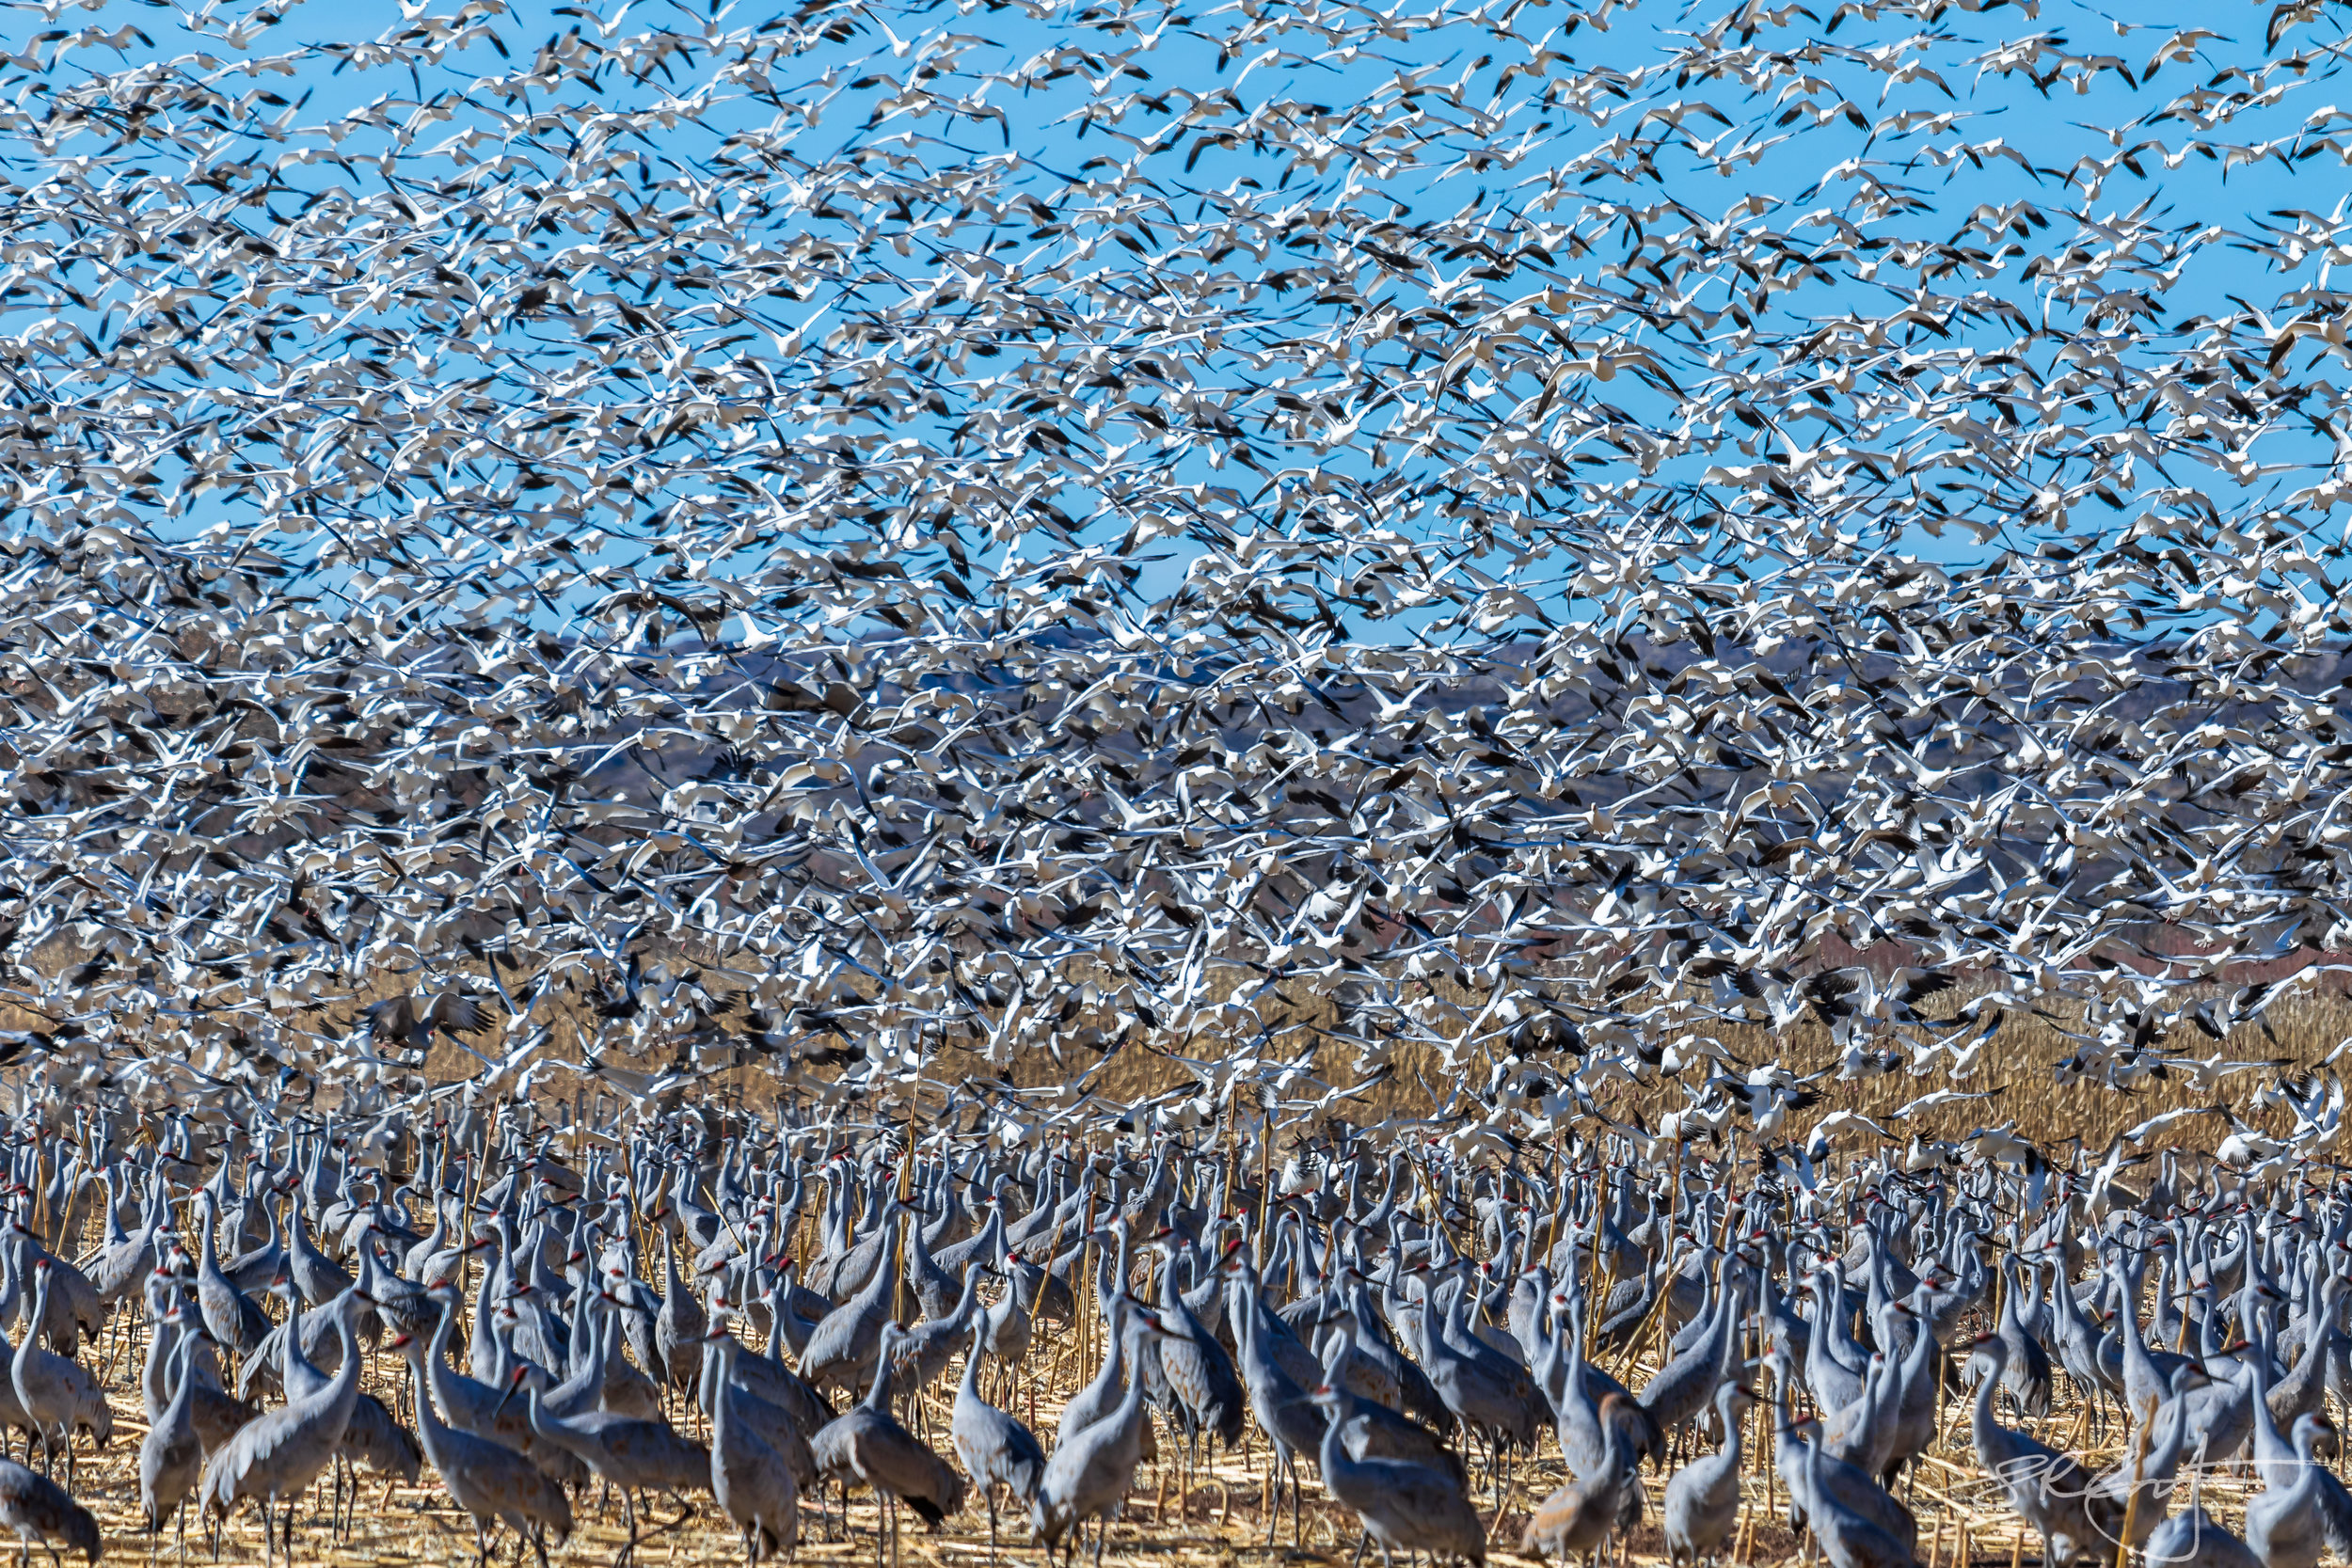 The Geese react, the Cranes keep calm.